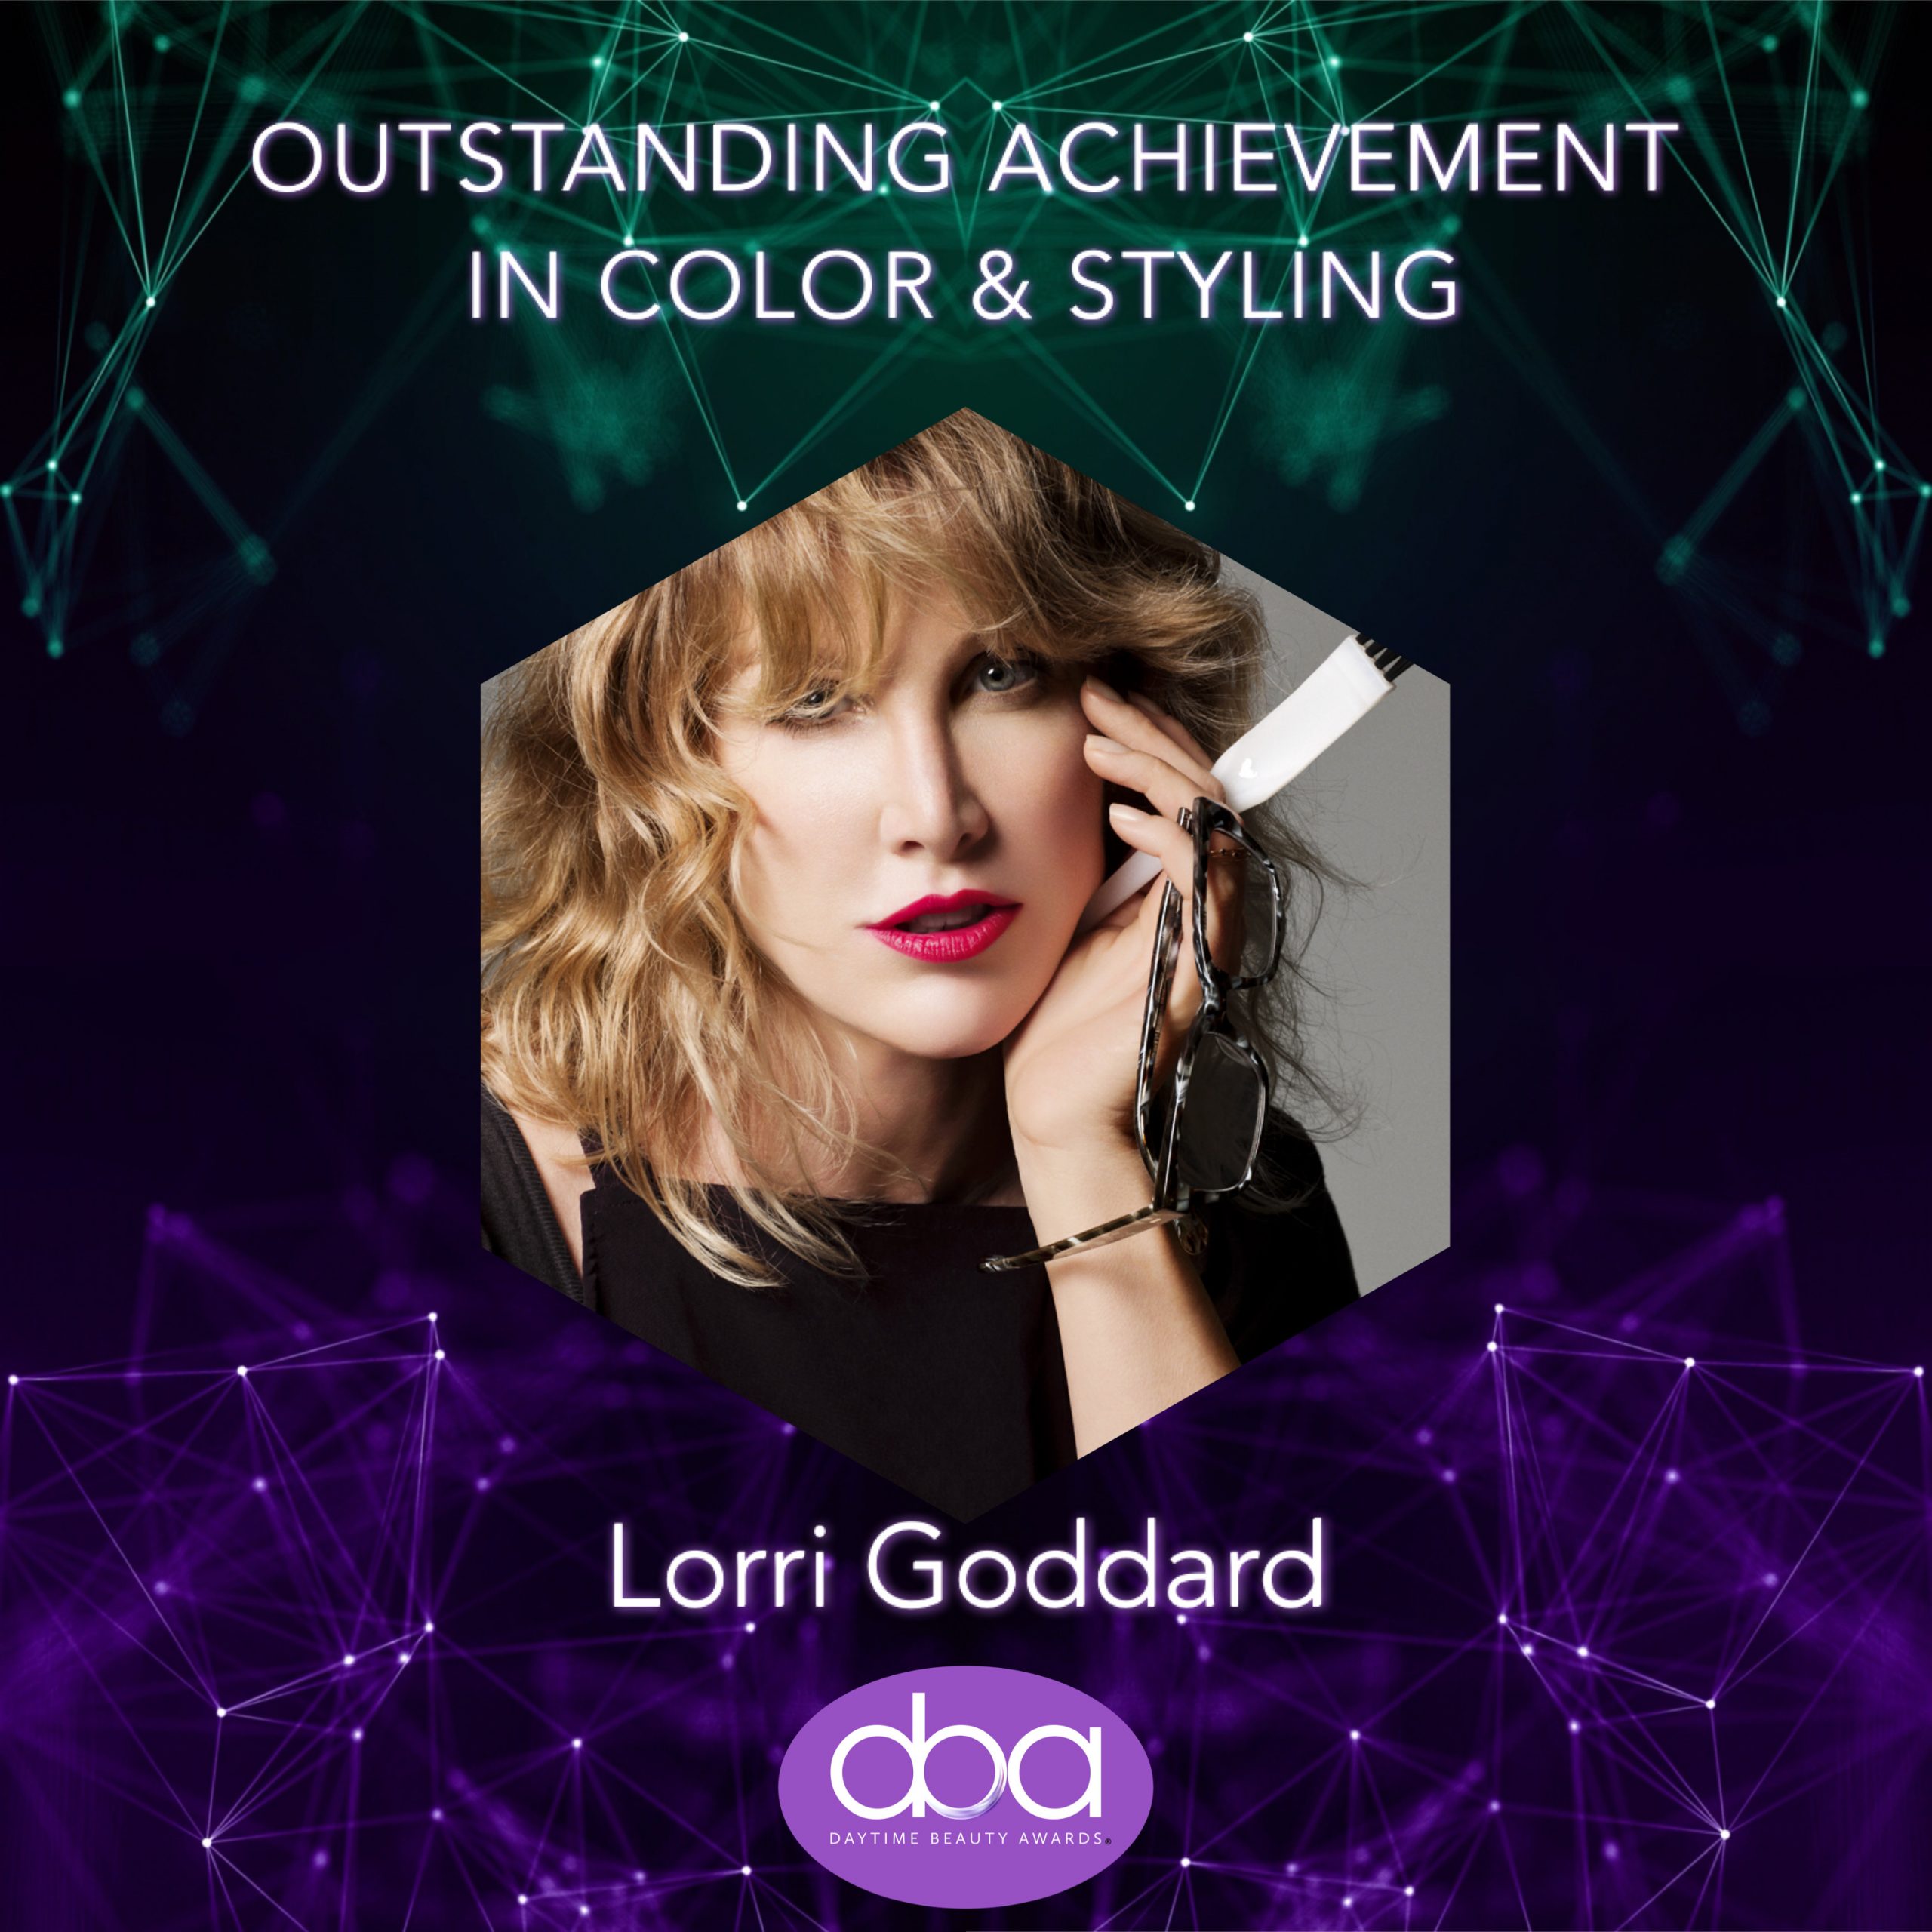 lorri goddard, colorist, daytime beauty awards, hair color, honoree award